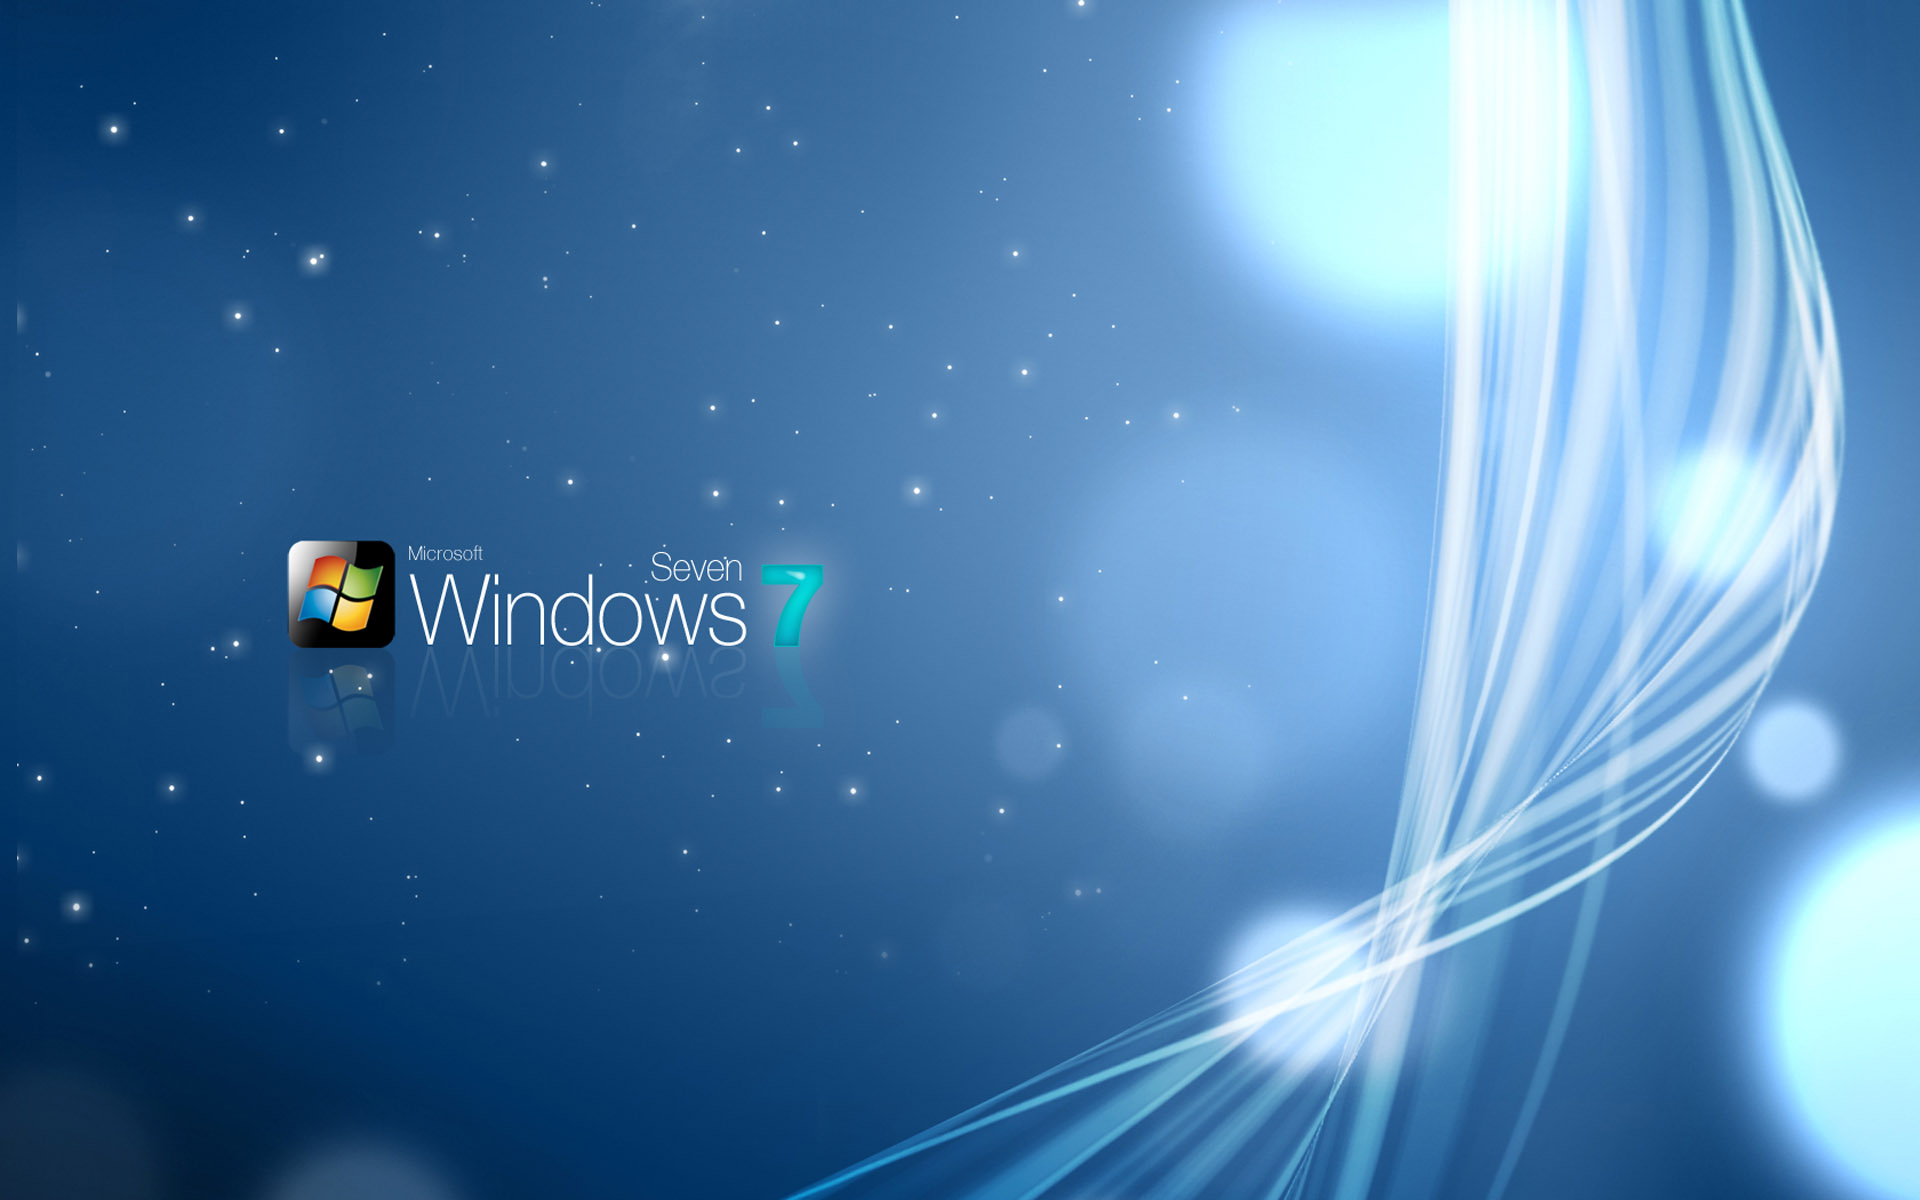 Baixar papel de parede para celular de Windows 7, Microsoft, Onda, Tecnologia, Janelas, Logotipo, Estrelas gratuito.